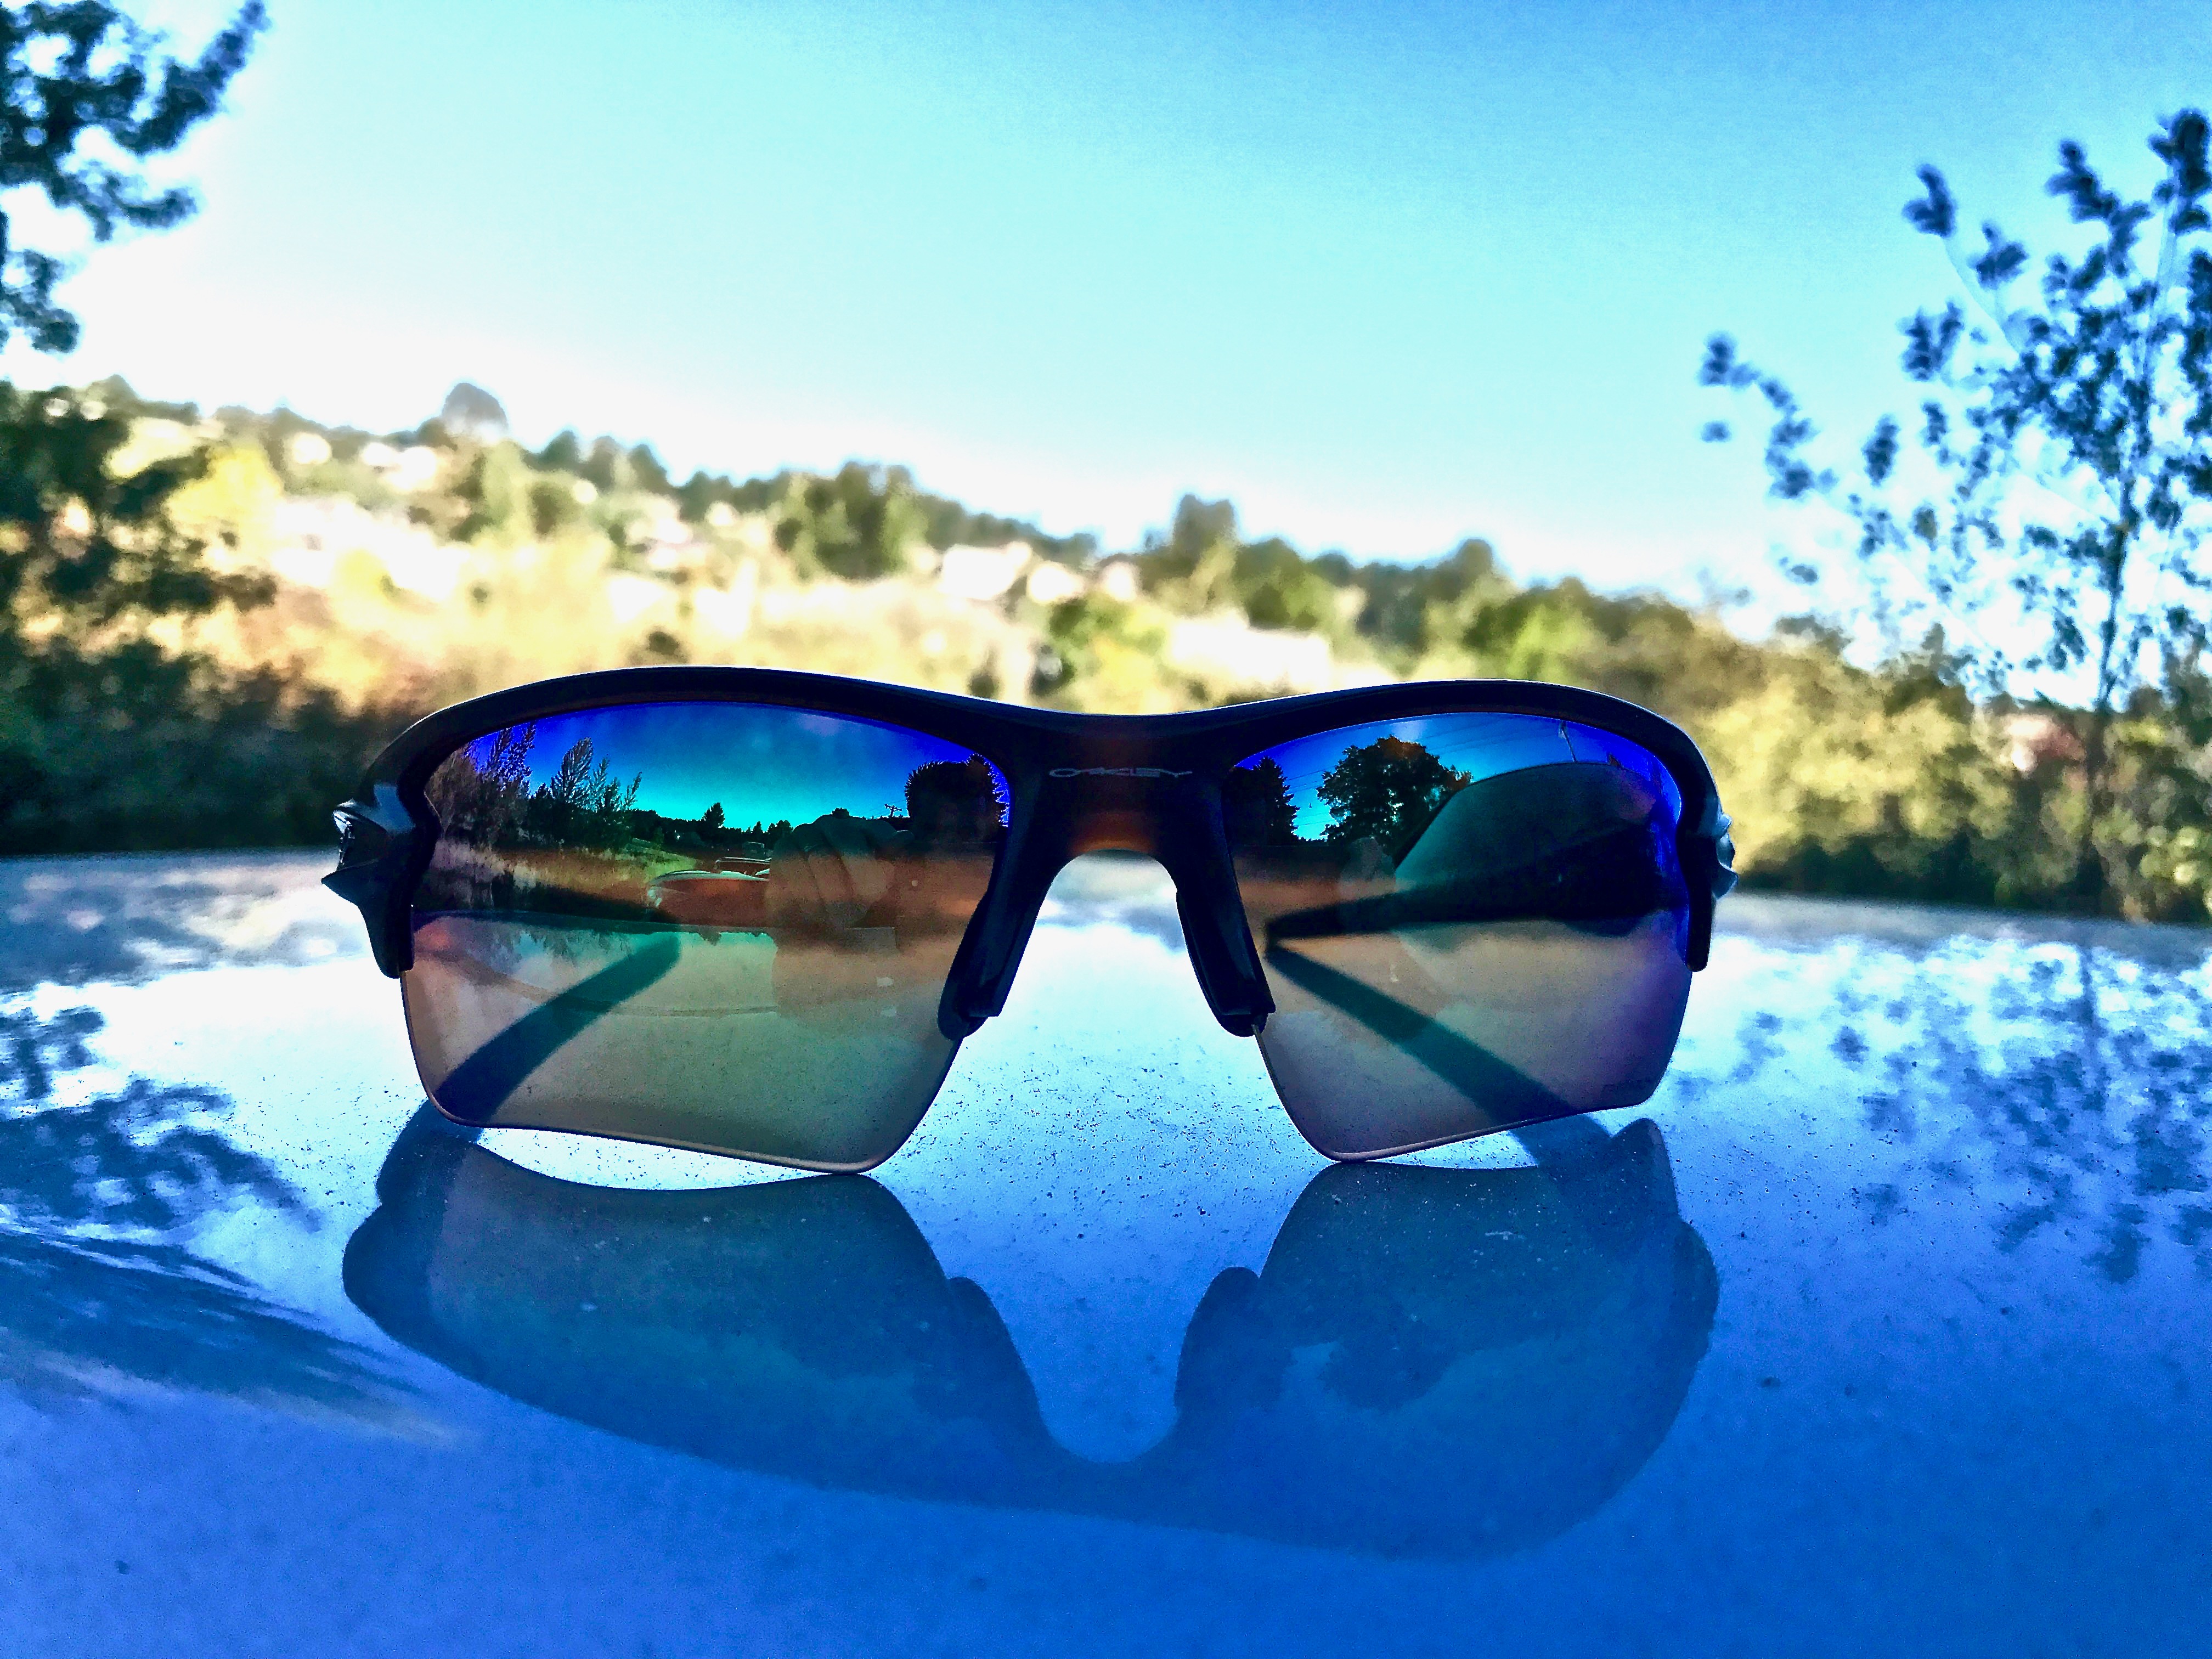 Oakley Flak 2.0 Sunglasses - Flight Sunglasses